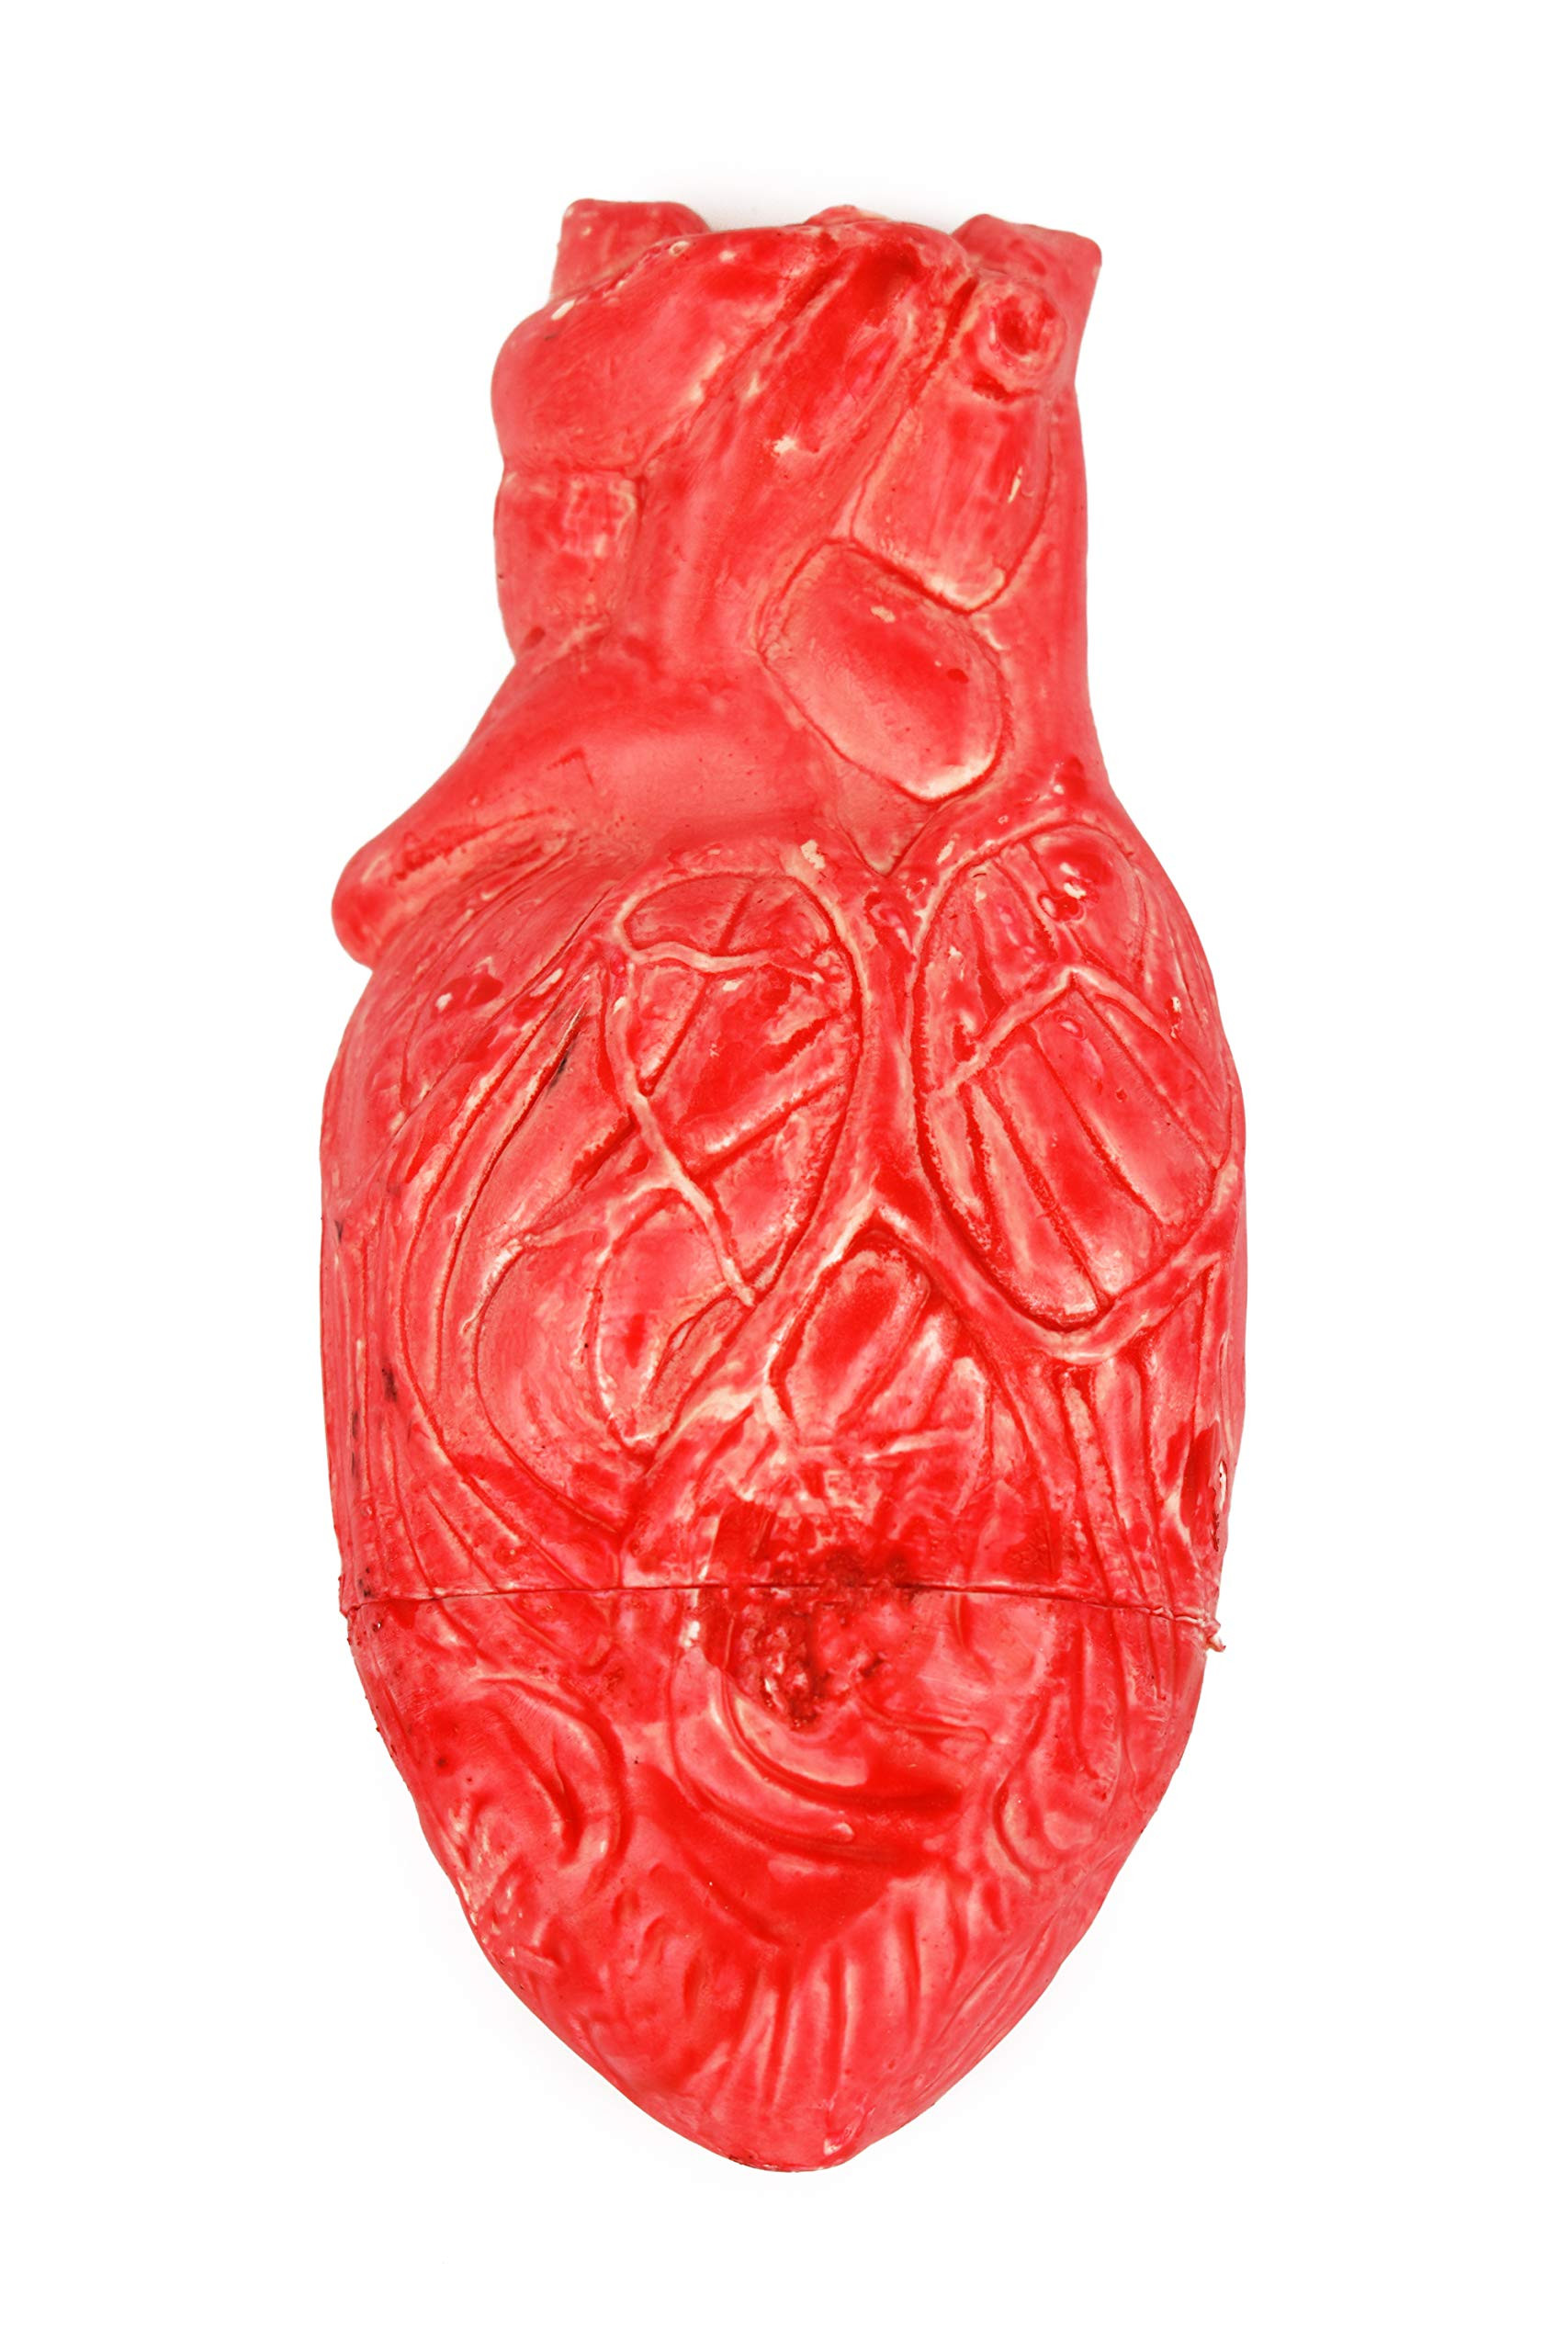 28 Stylish Anatomical Heart Flower Vase 2024 free download anatomical heart flower vase of amazon com black duck brand intended for 81f5kasrgxl